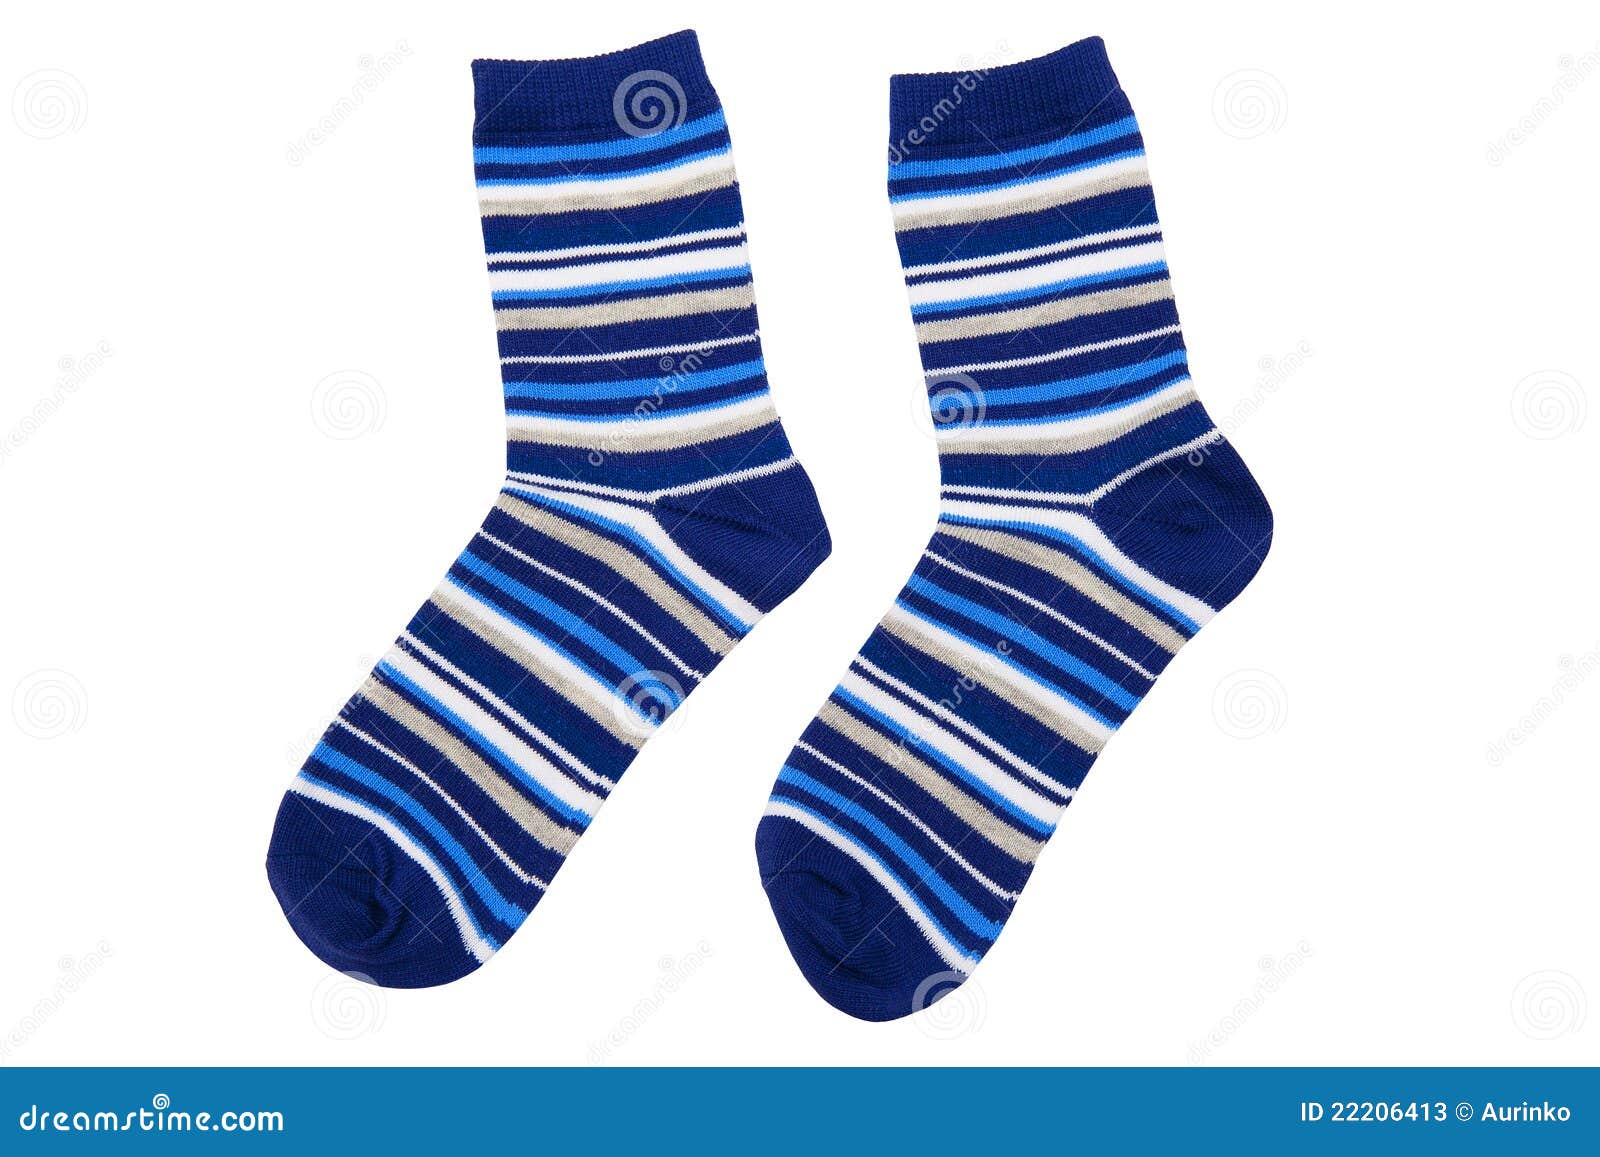 Socks stock image. Image of blue, pattern, heating, feet - 22206413